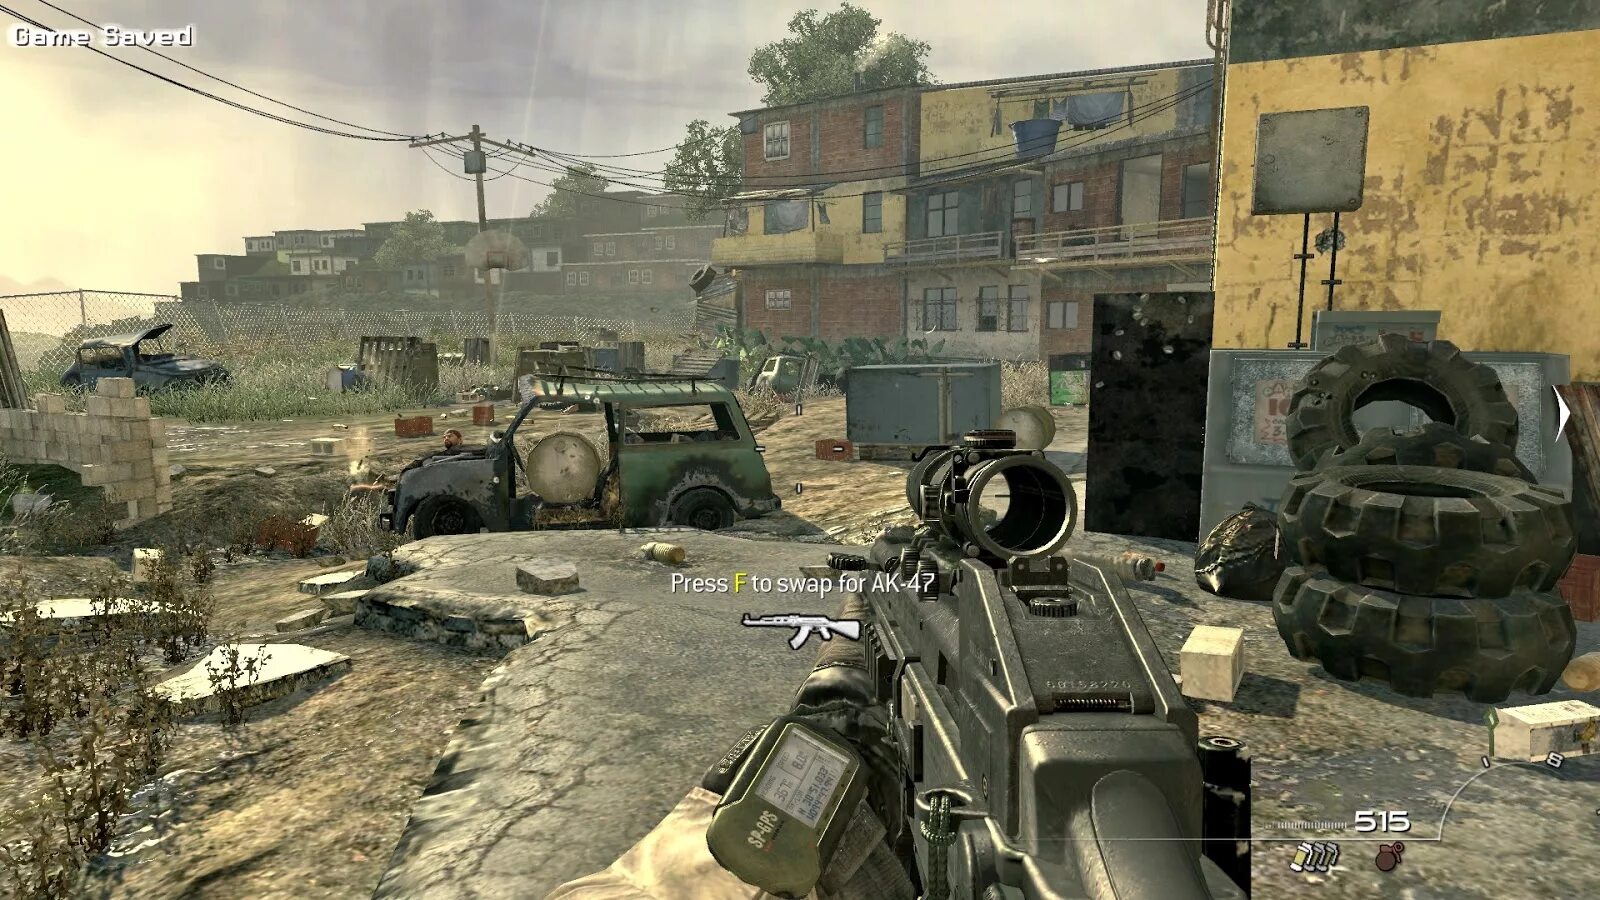 Modern Warfare 2. Call of Duty 4 Modern Warfare 2. Cod 2 Modern Warfare 2. Call of Duty mw2. Требования кал оф дьюти модерн варфаер 2